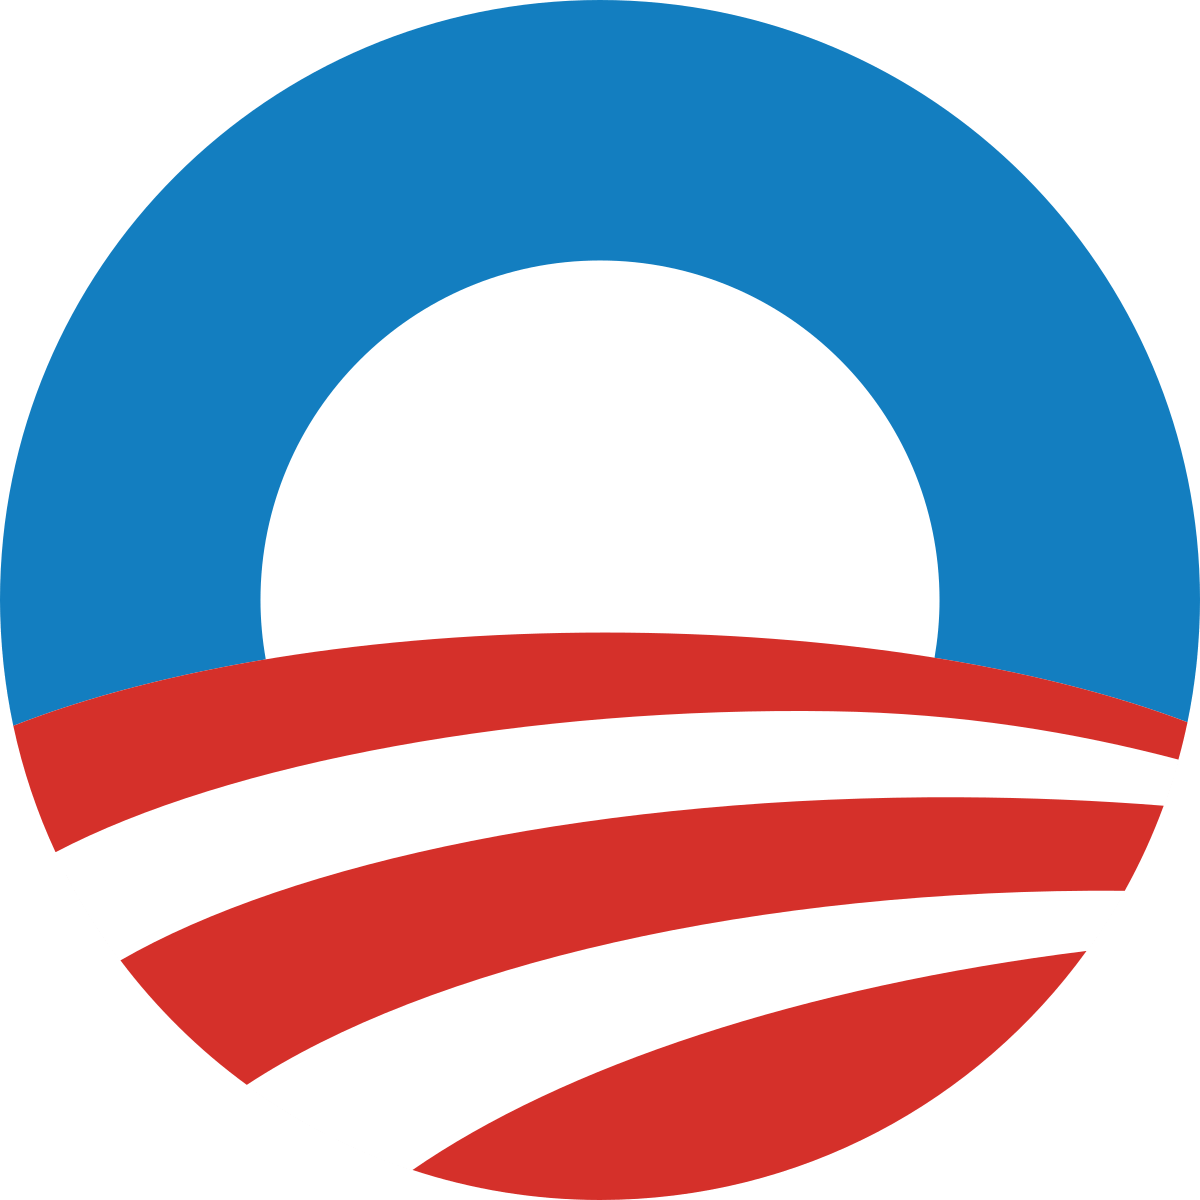 barak obama's 2008 logo